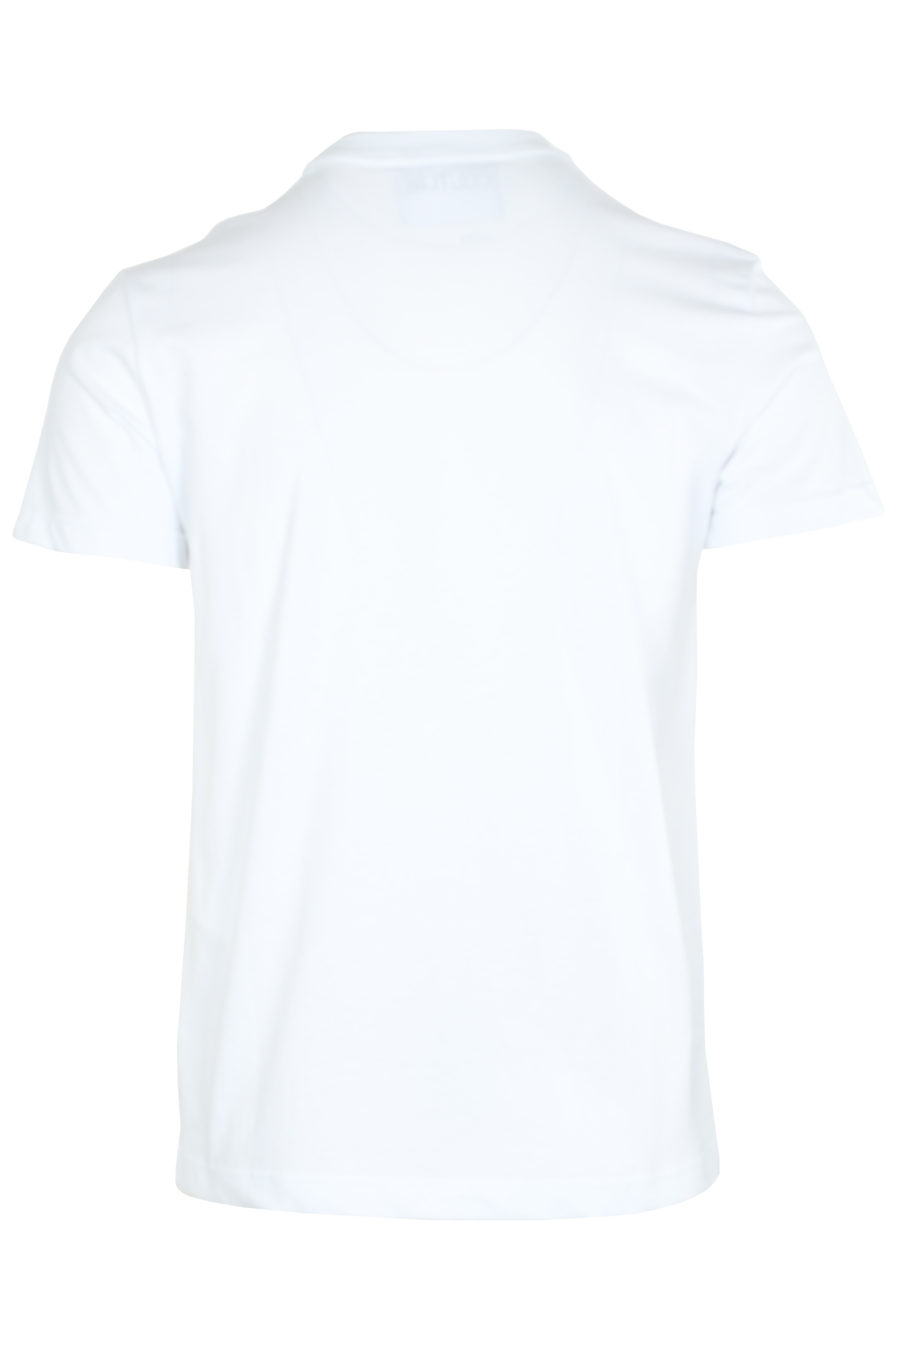 Camiseta de manga corta blanca con logo negro - IMG 6218